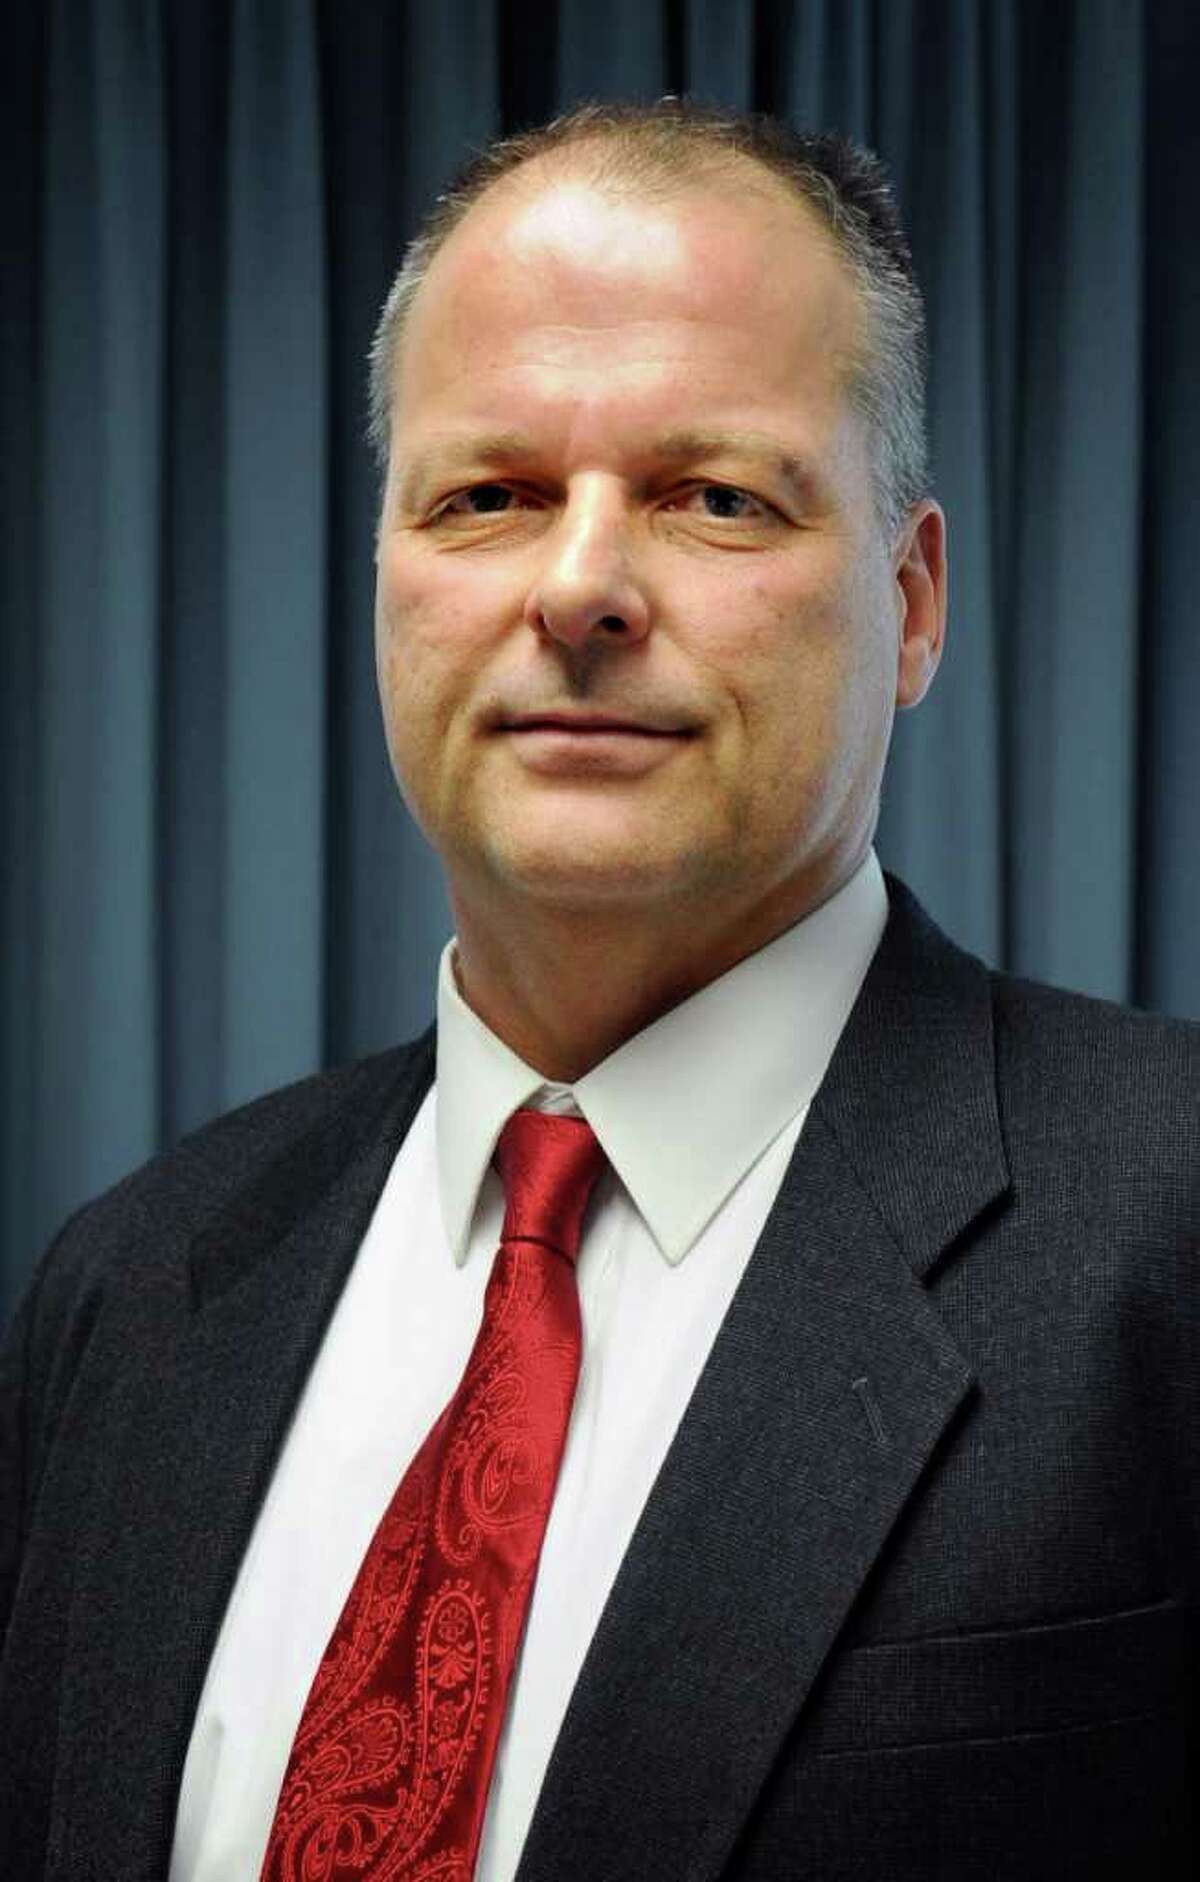 Stamford Director of Public Safety Thaddeus Jankowski on Friday, March 2, 2012.